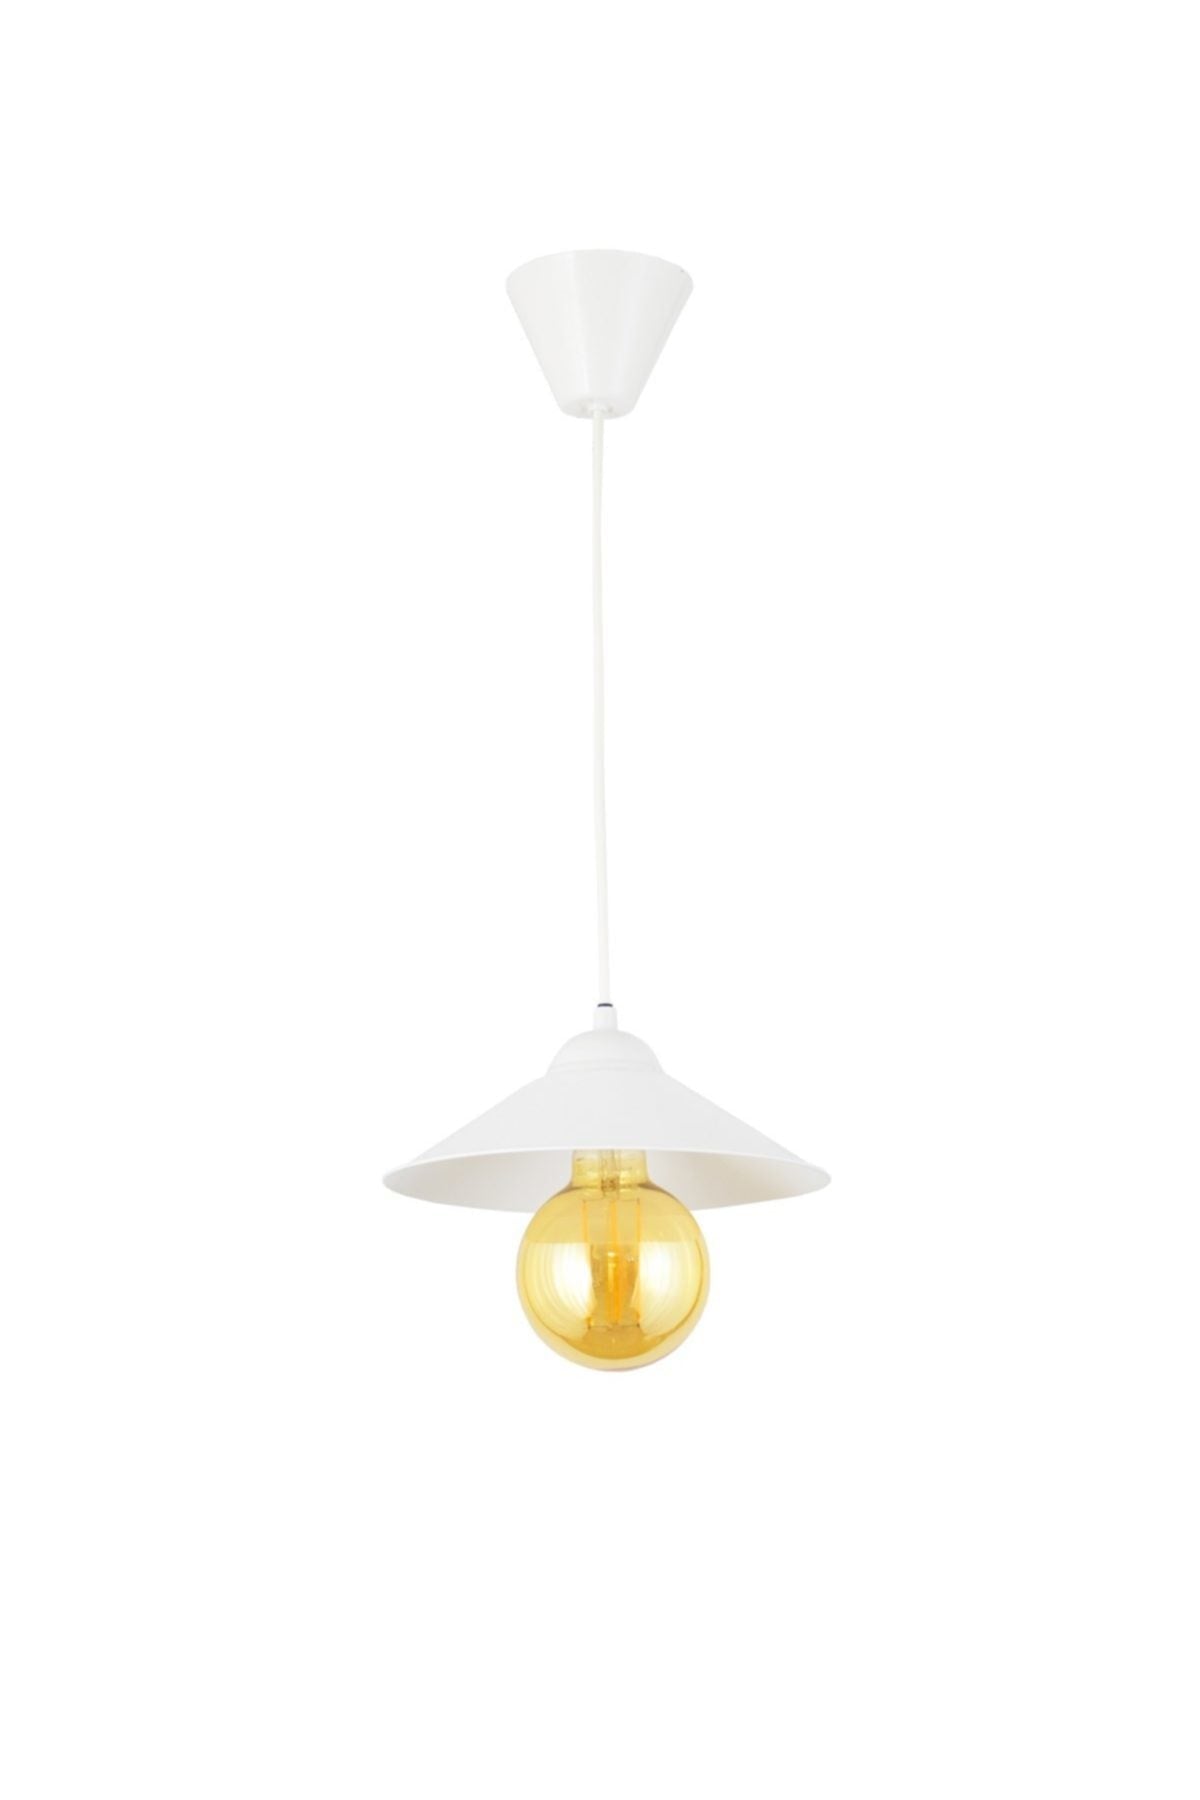 Retro rustic model single white pendulum chandelier